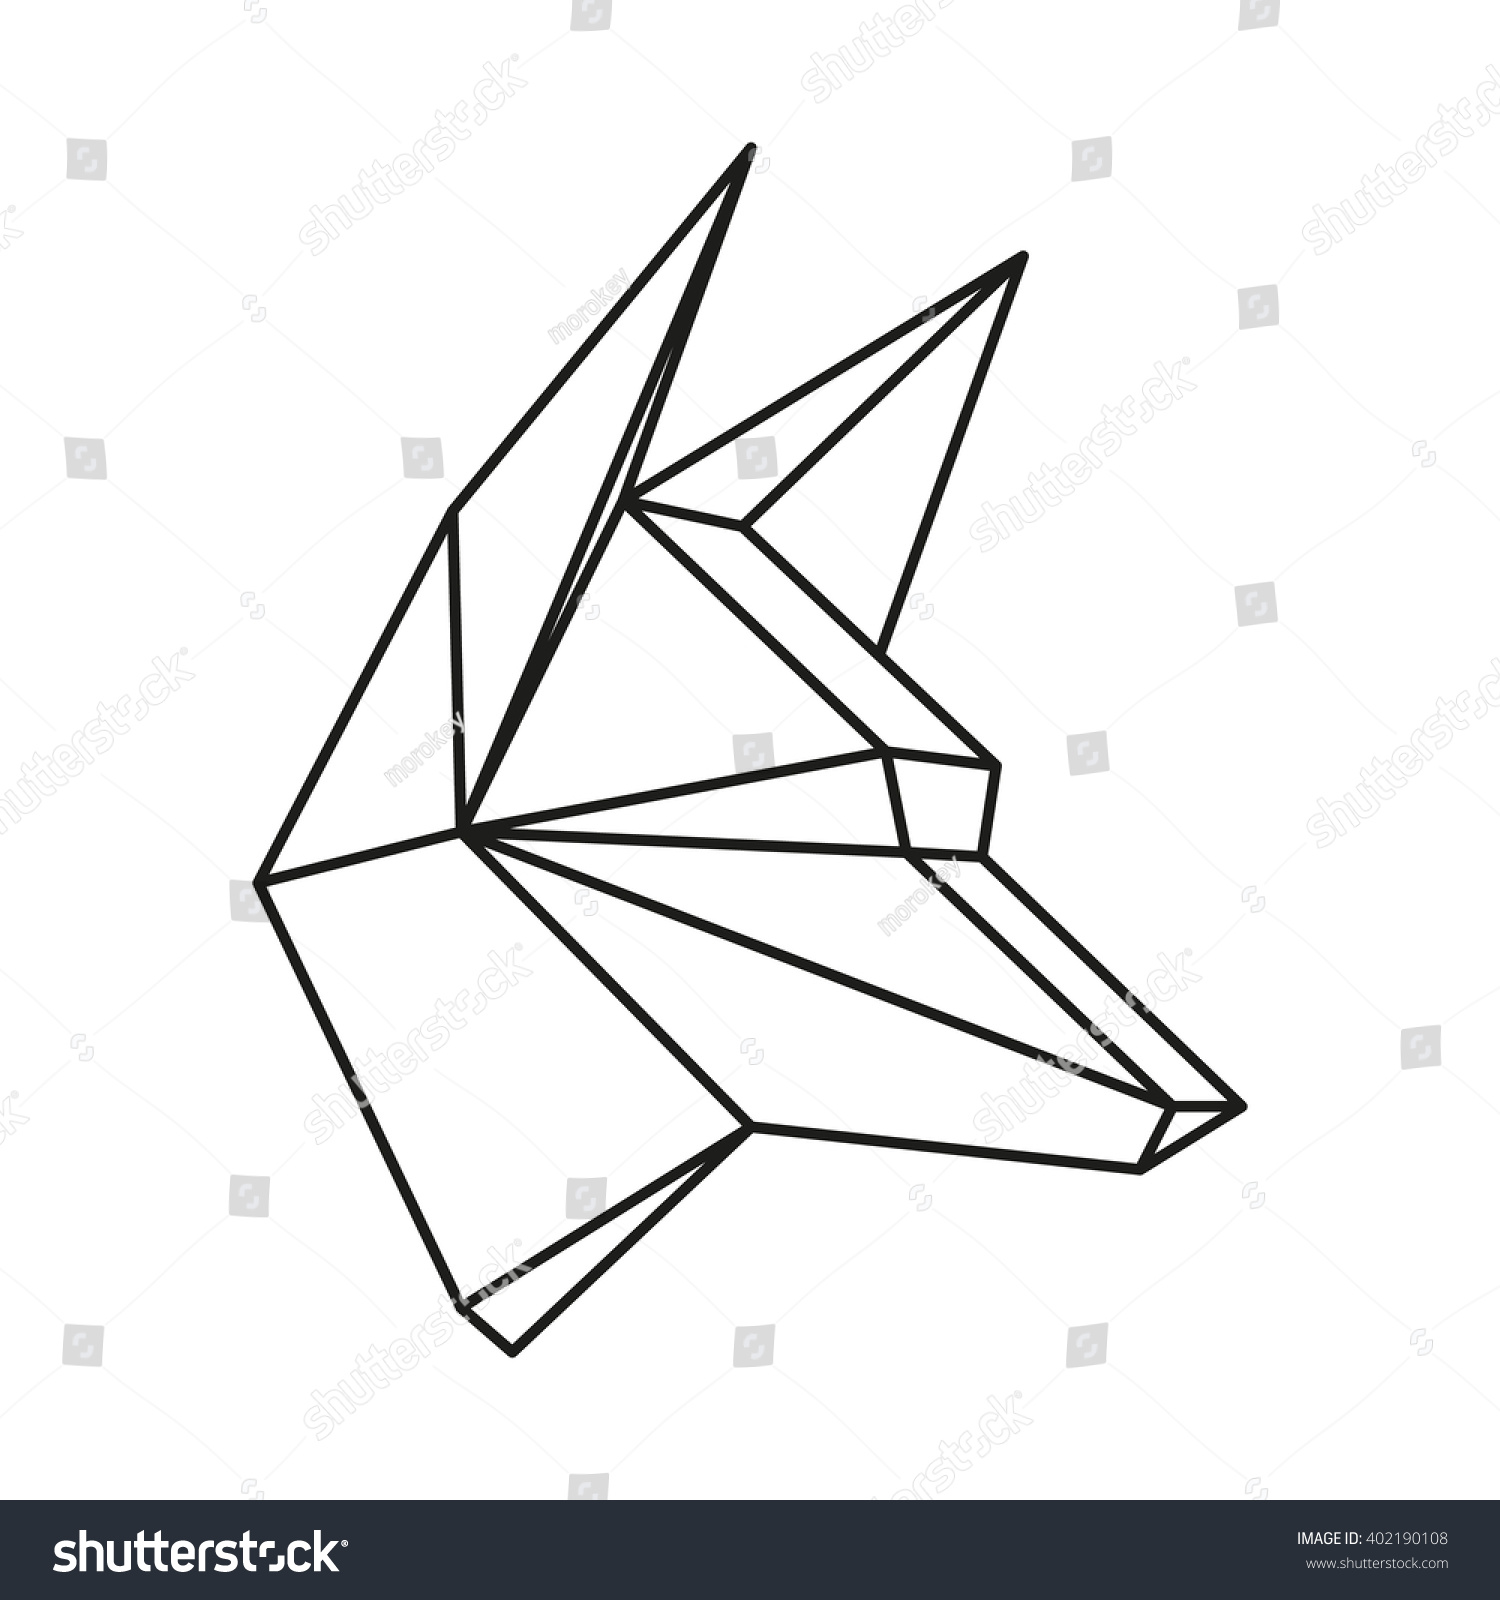 Geometric Vector Animal Wolf Head Drawn In Line Or ...